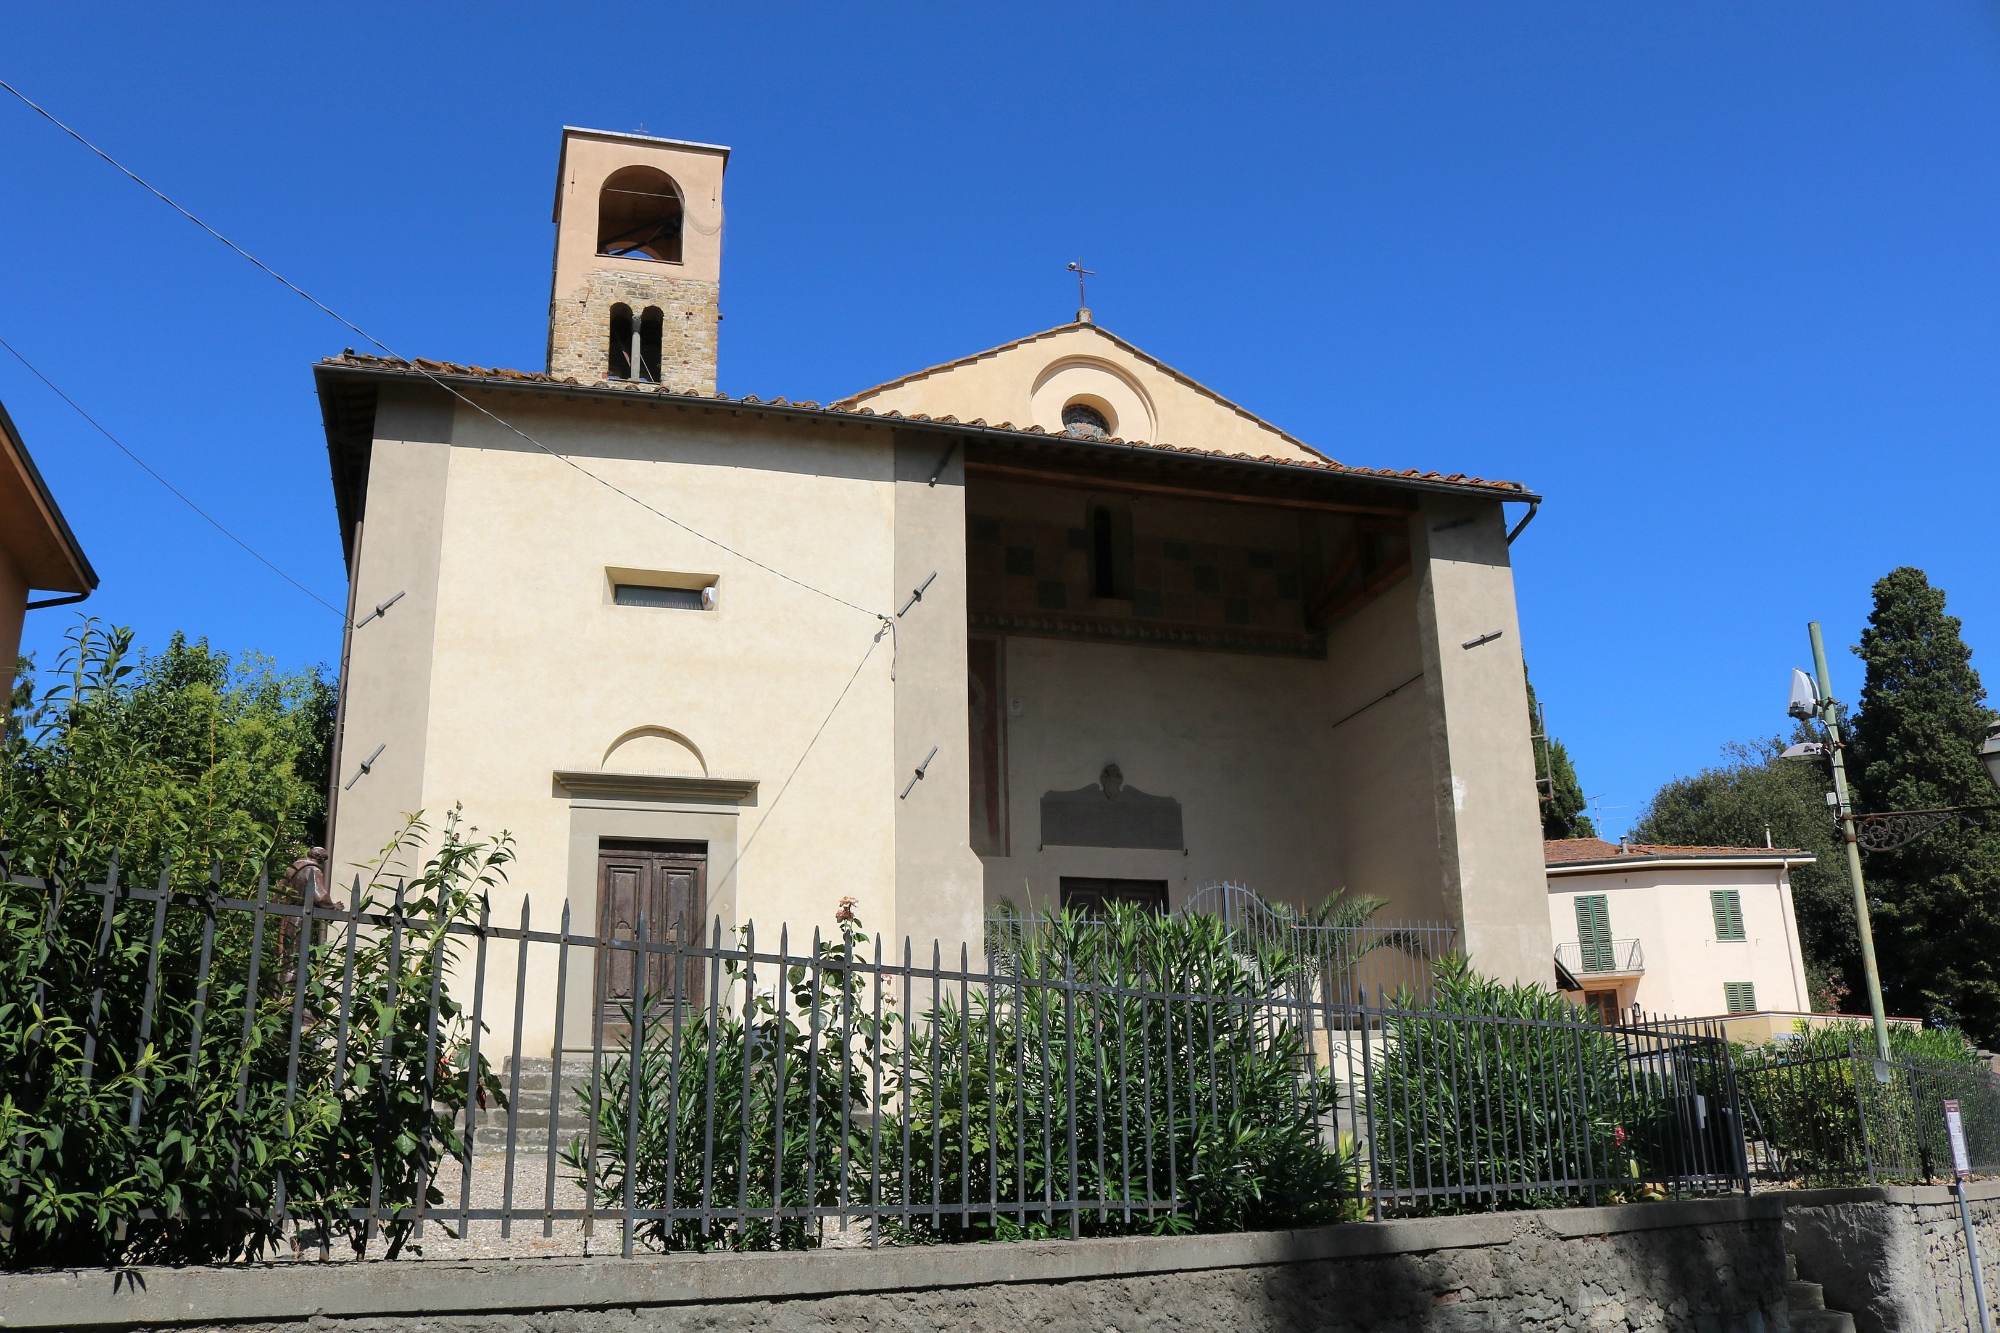 Parish church of St. Lorenzo in Signa